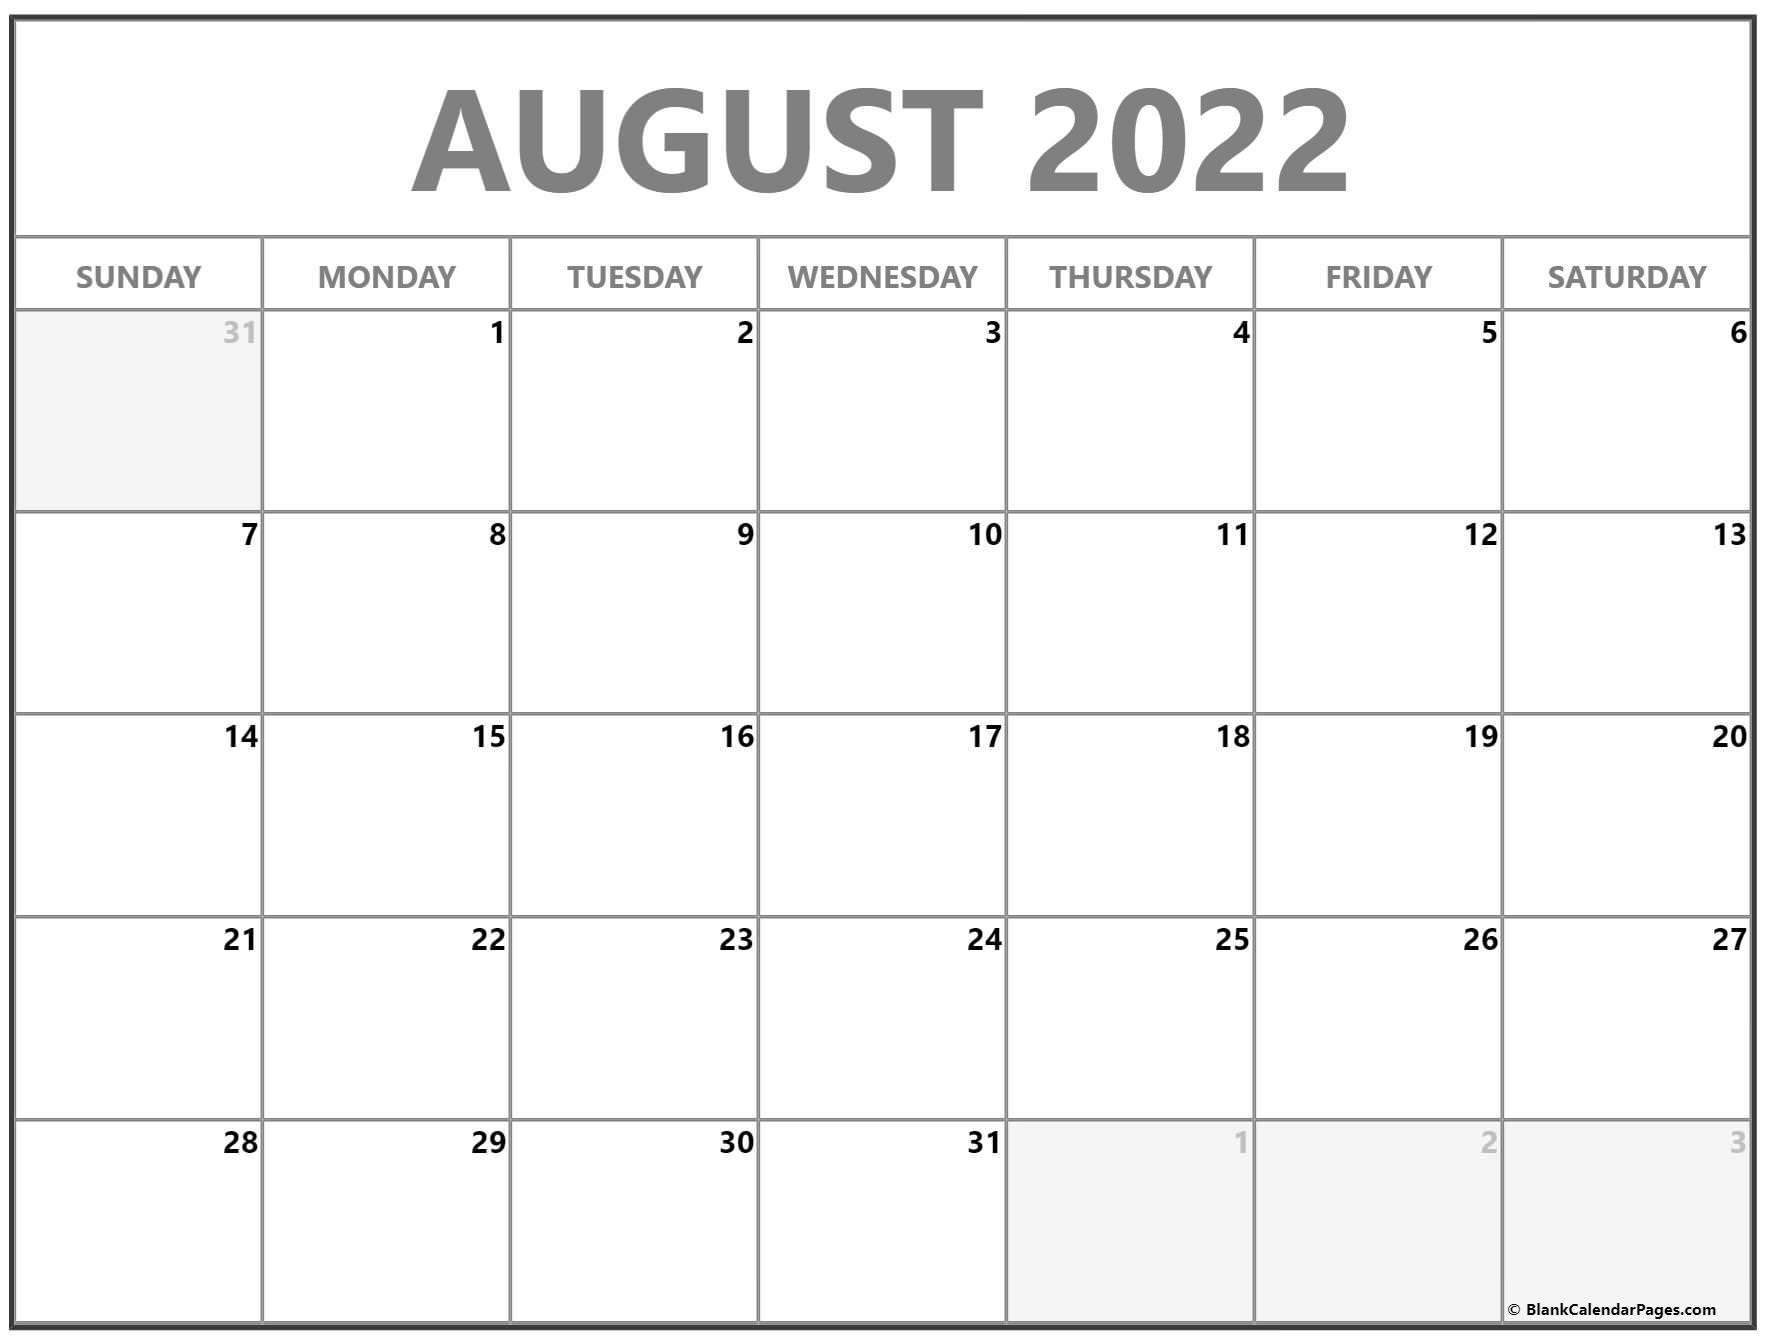 Get August 2022 Calendar Image